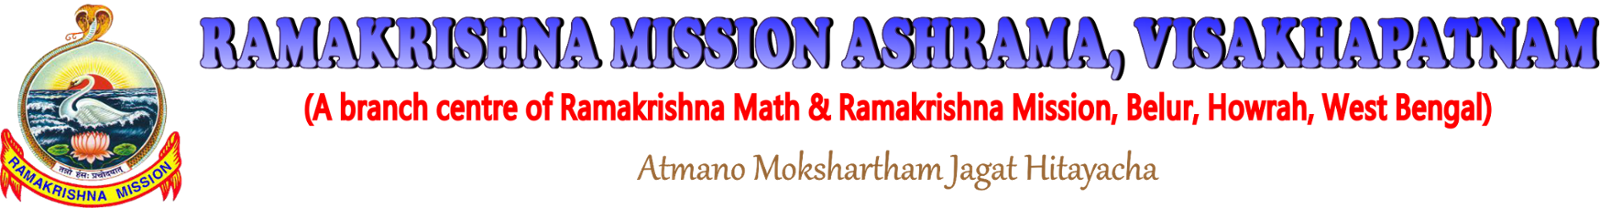 Ramakrishna Mission Ashrama, Visakhapatnam